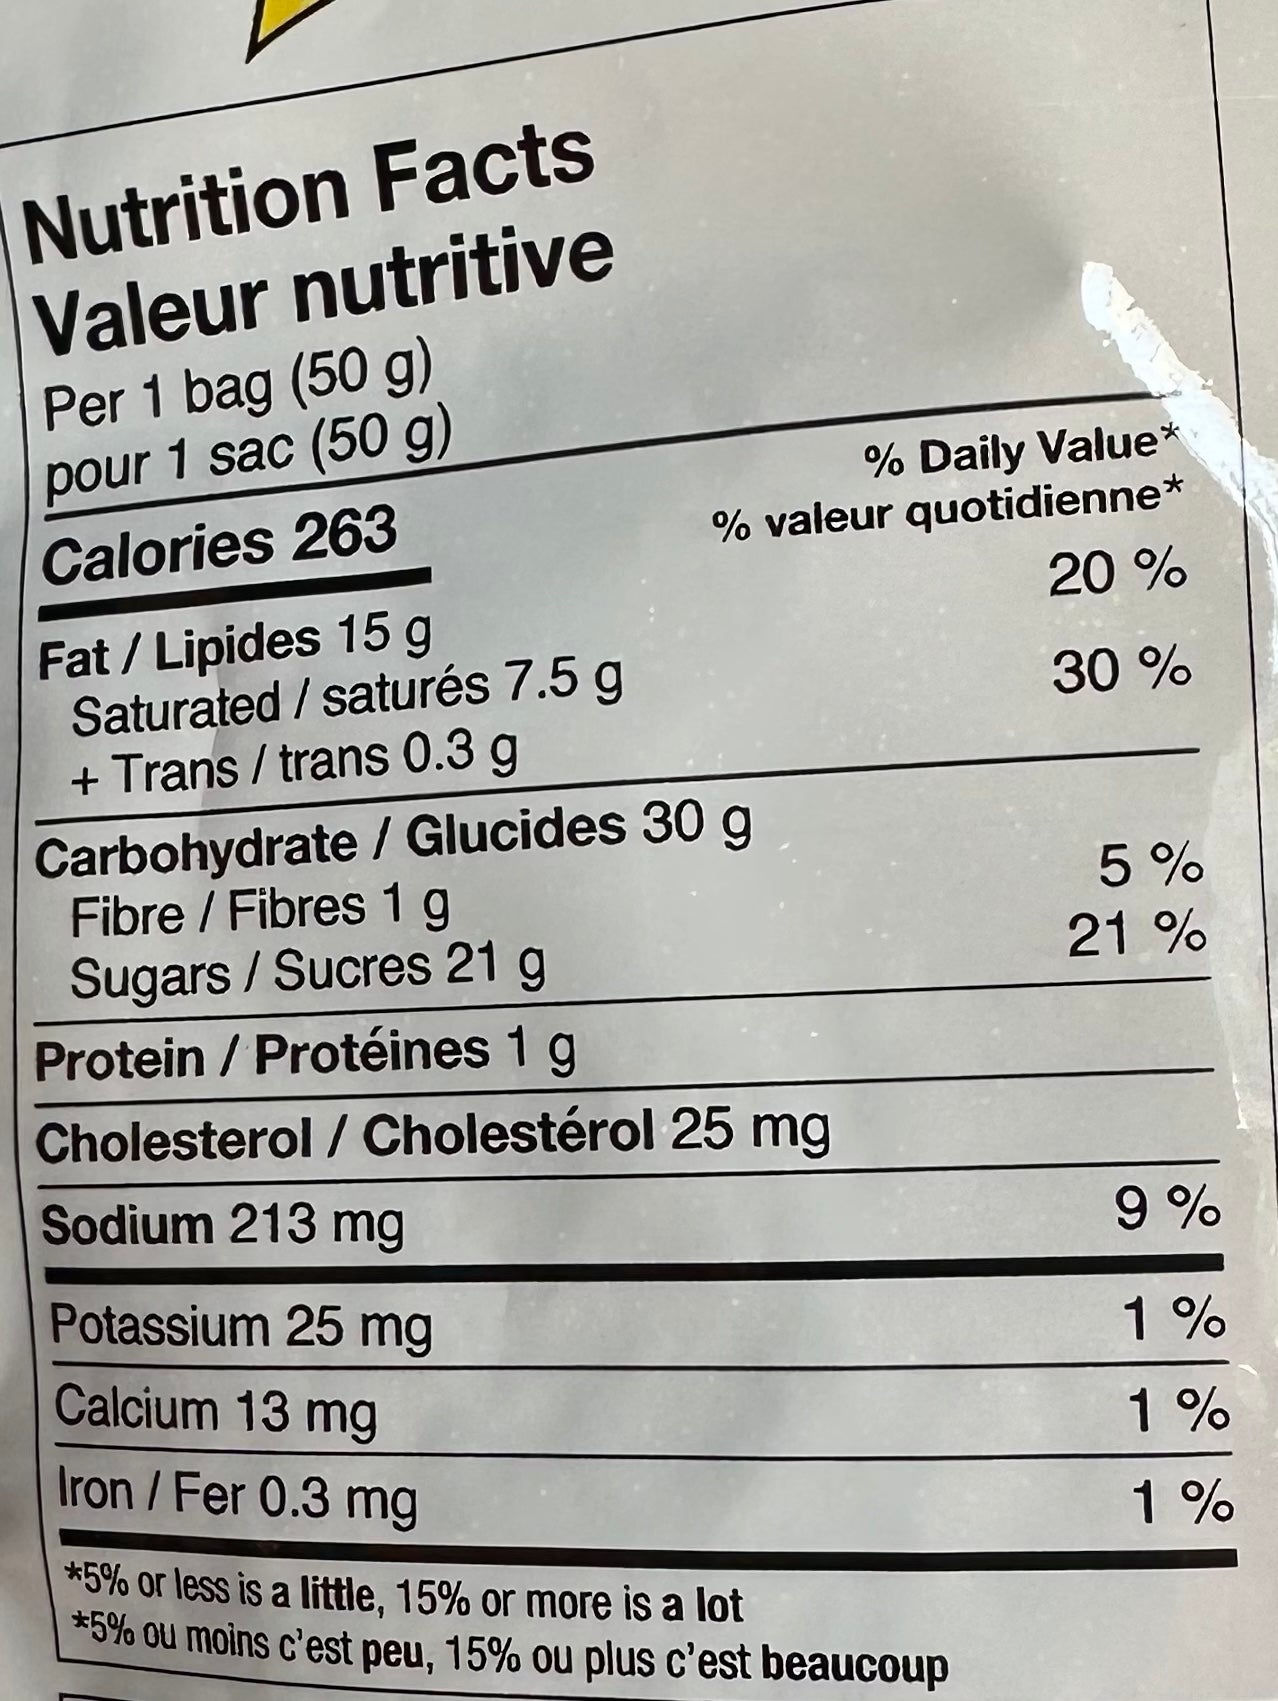 PEI Mix Nutritional Label